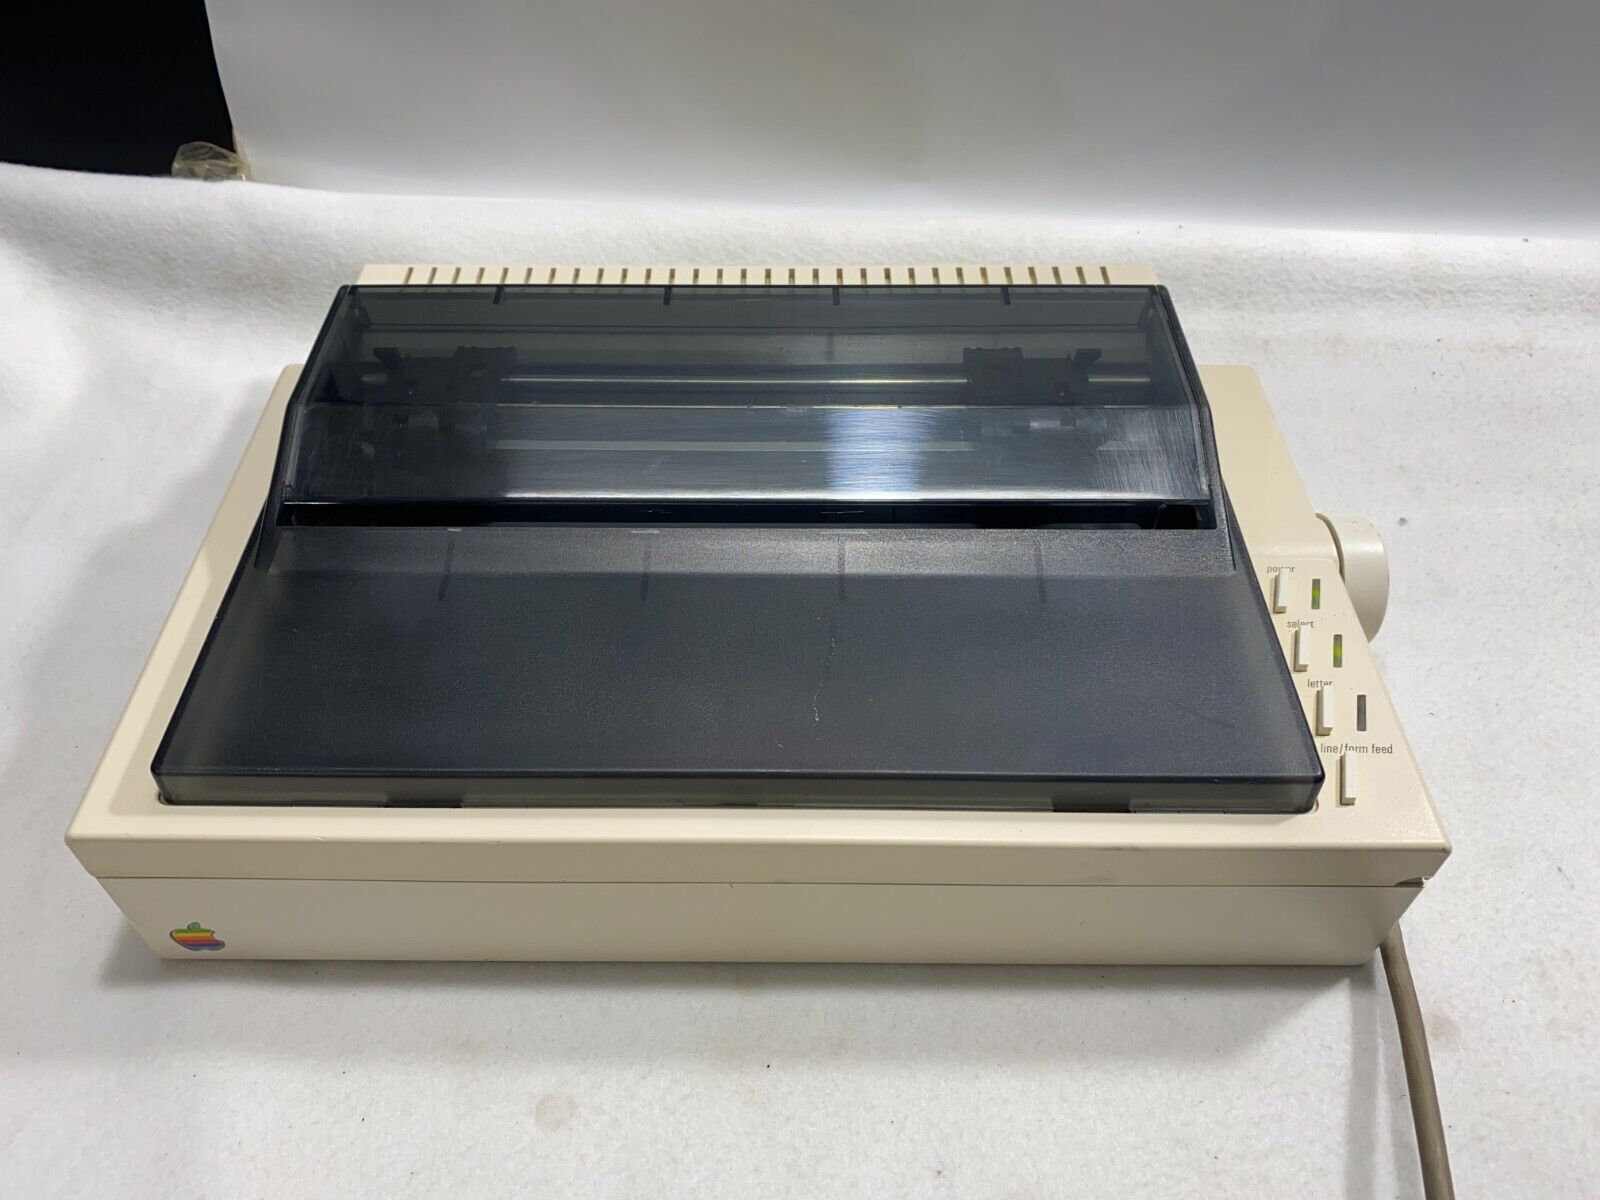 Vintage Thermal Transfer Printer A9M0306 For Apple llc Computer System